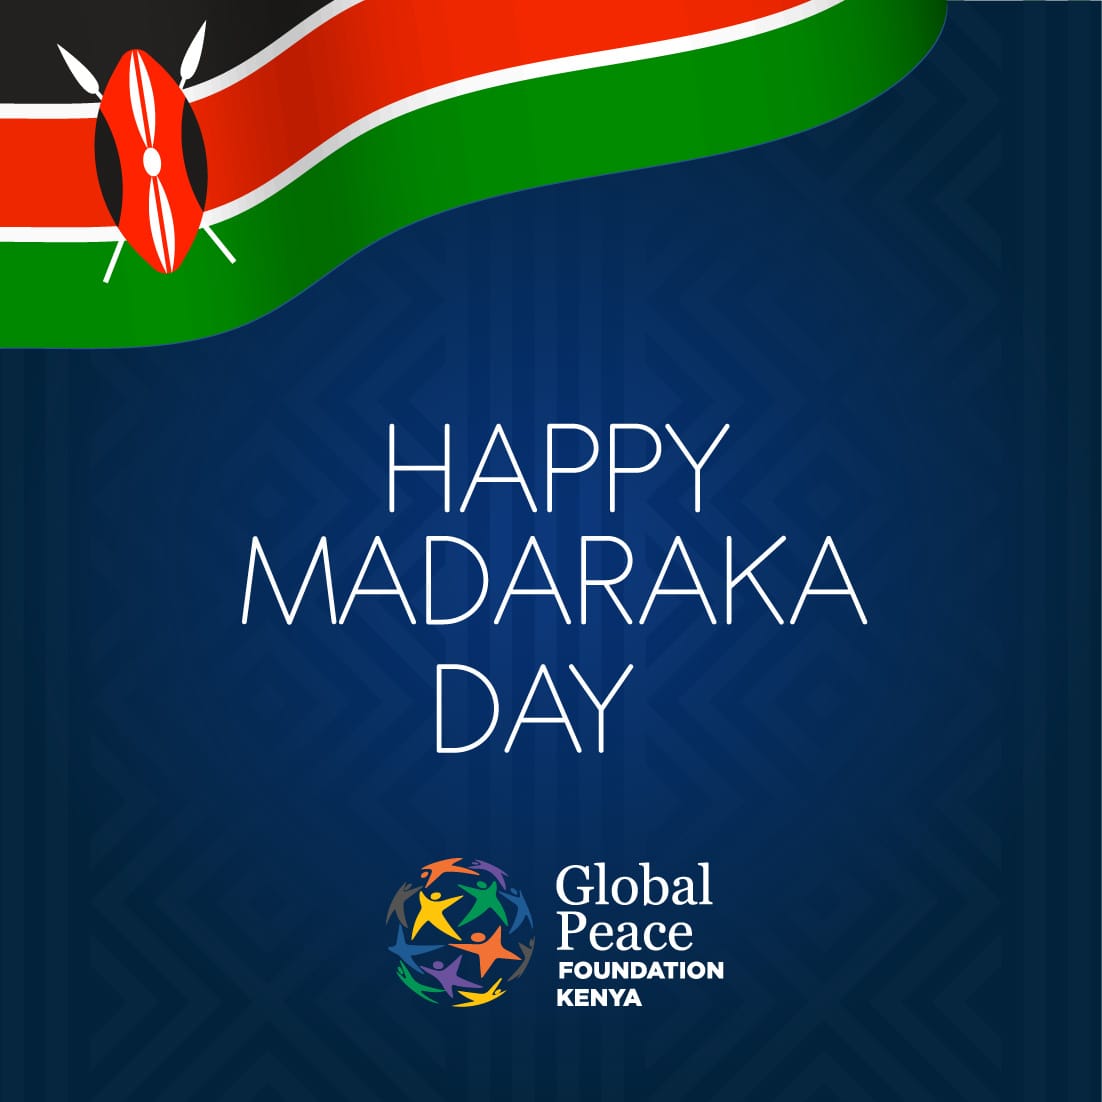 Happy #madarakaday 2023. @StateHouseKenya @WilliamsRuto @rigathi @CecilyMbarire #Kenya #HappyMadarakaDay #Embu #KenyaMilele #globalpeace #tourembu Mwea Game Reserve